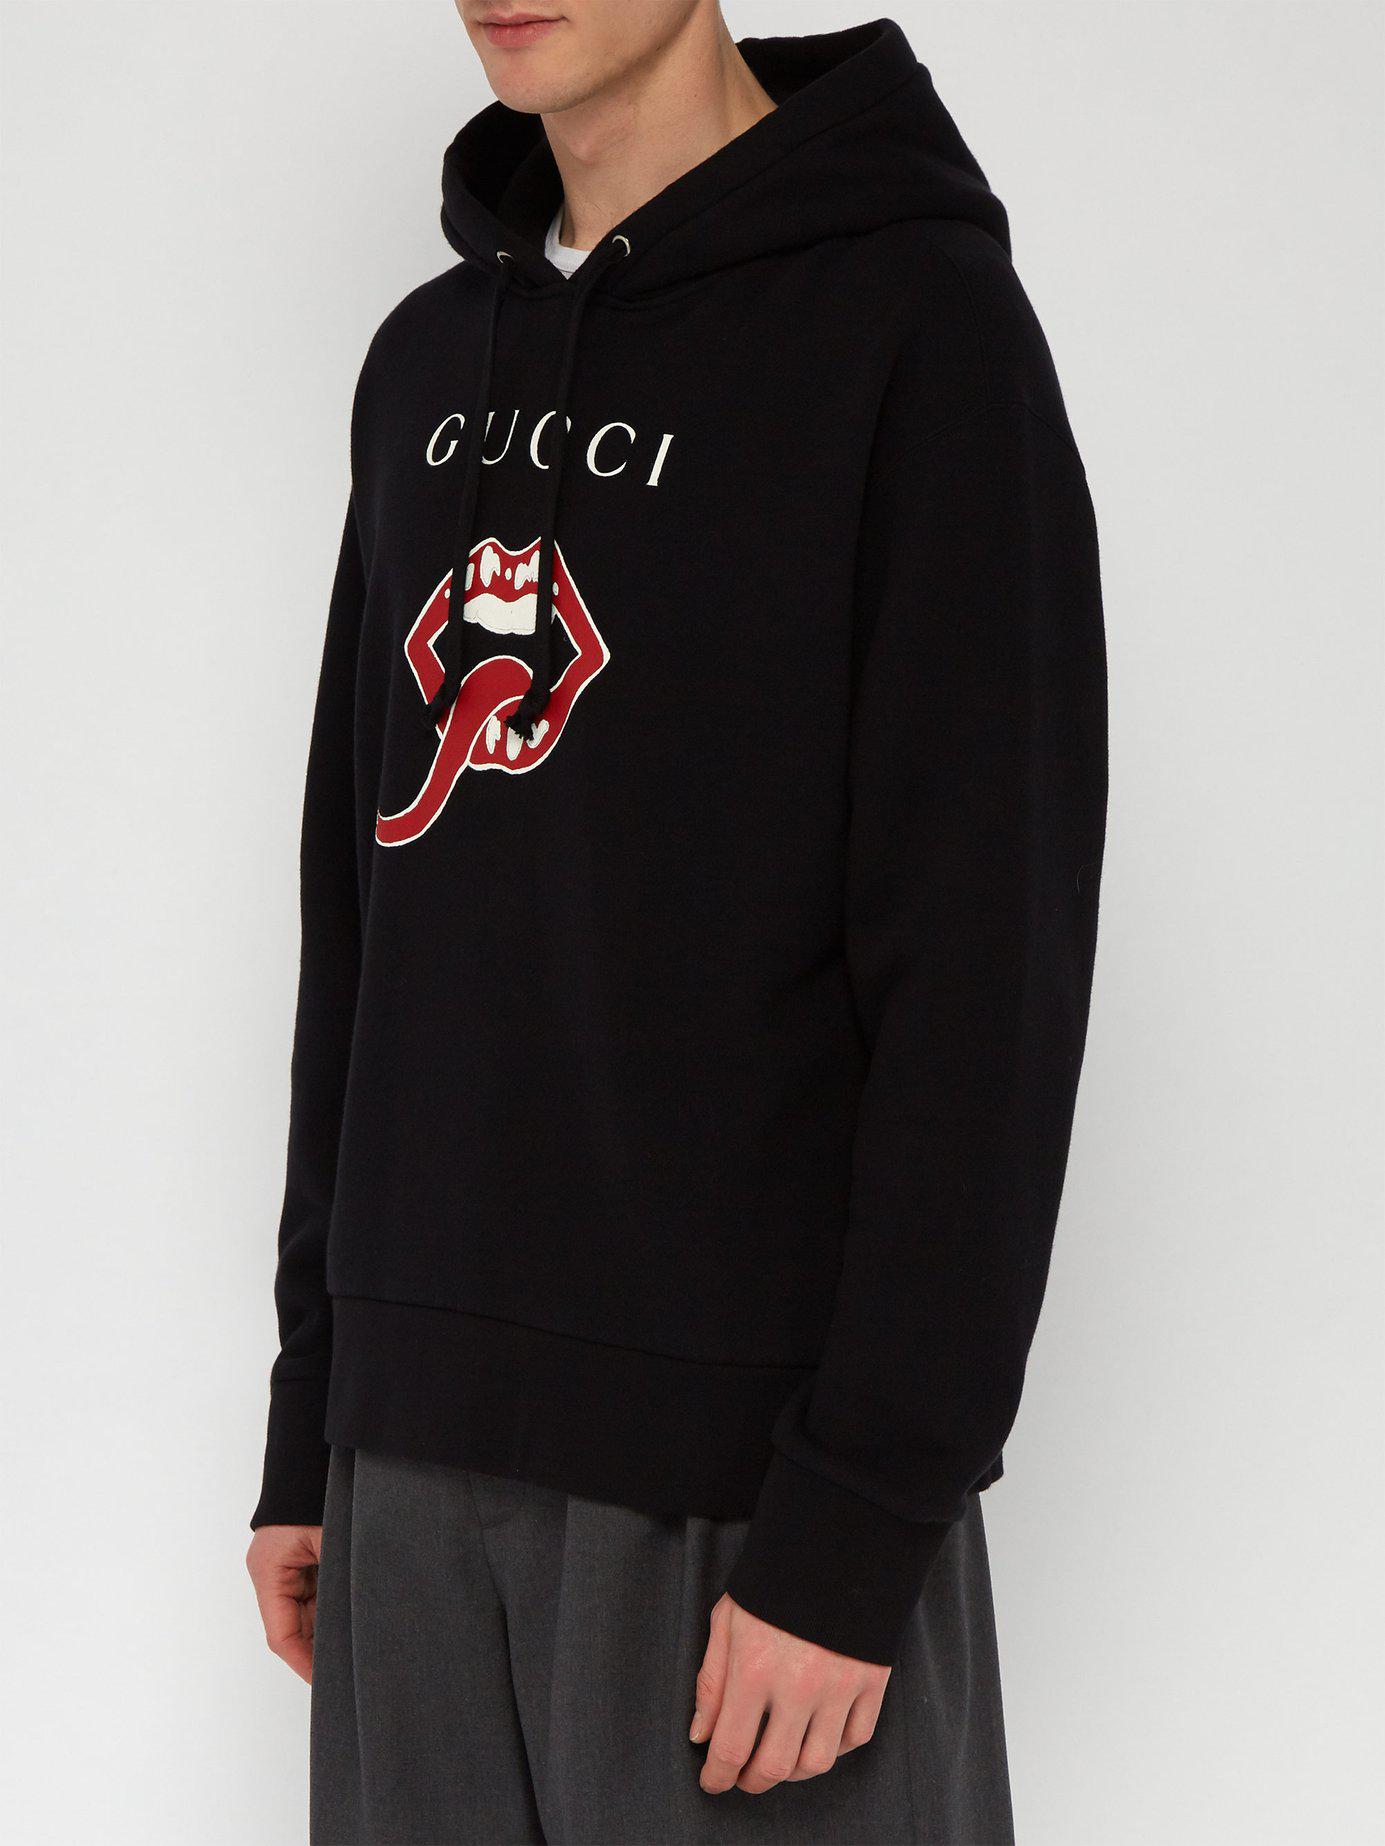 Gucci Cotton Lips Hooded Sweatshirt in Black for Men | Lyst